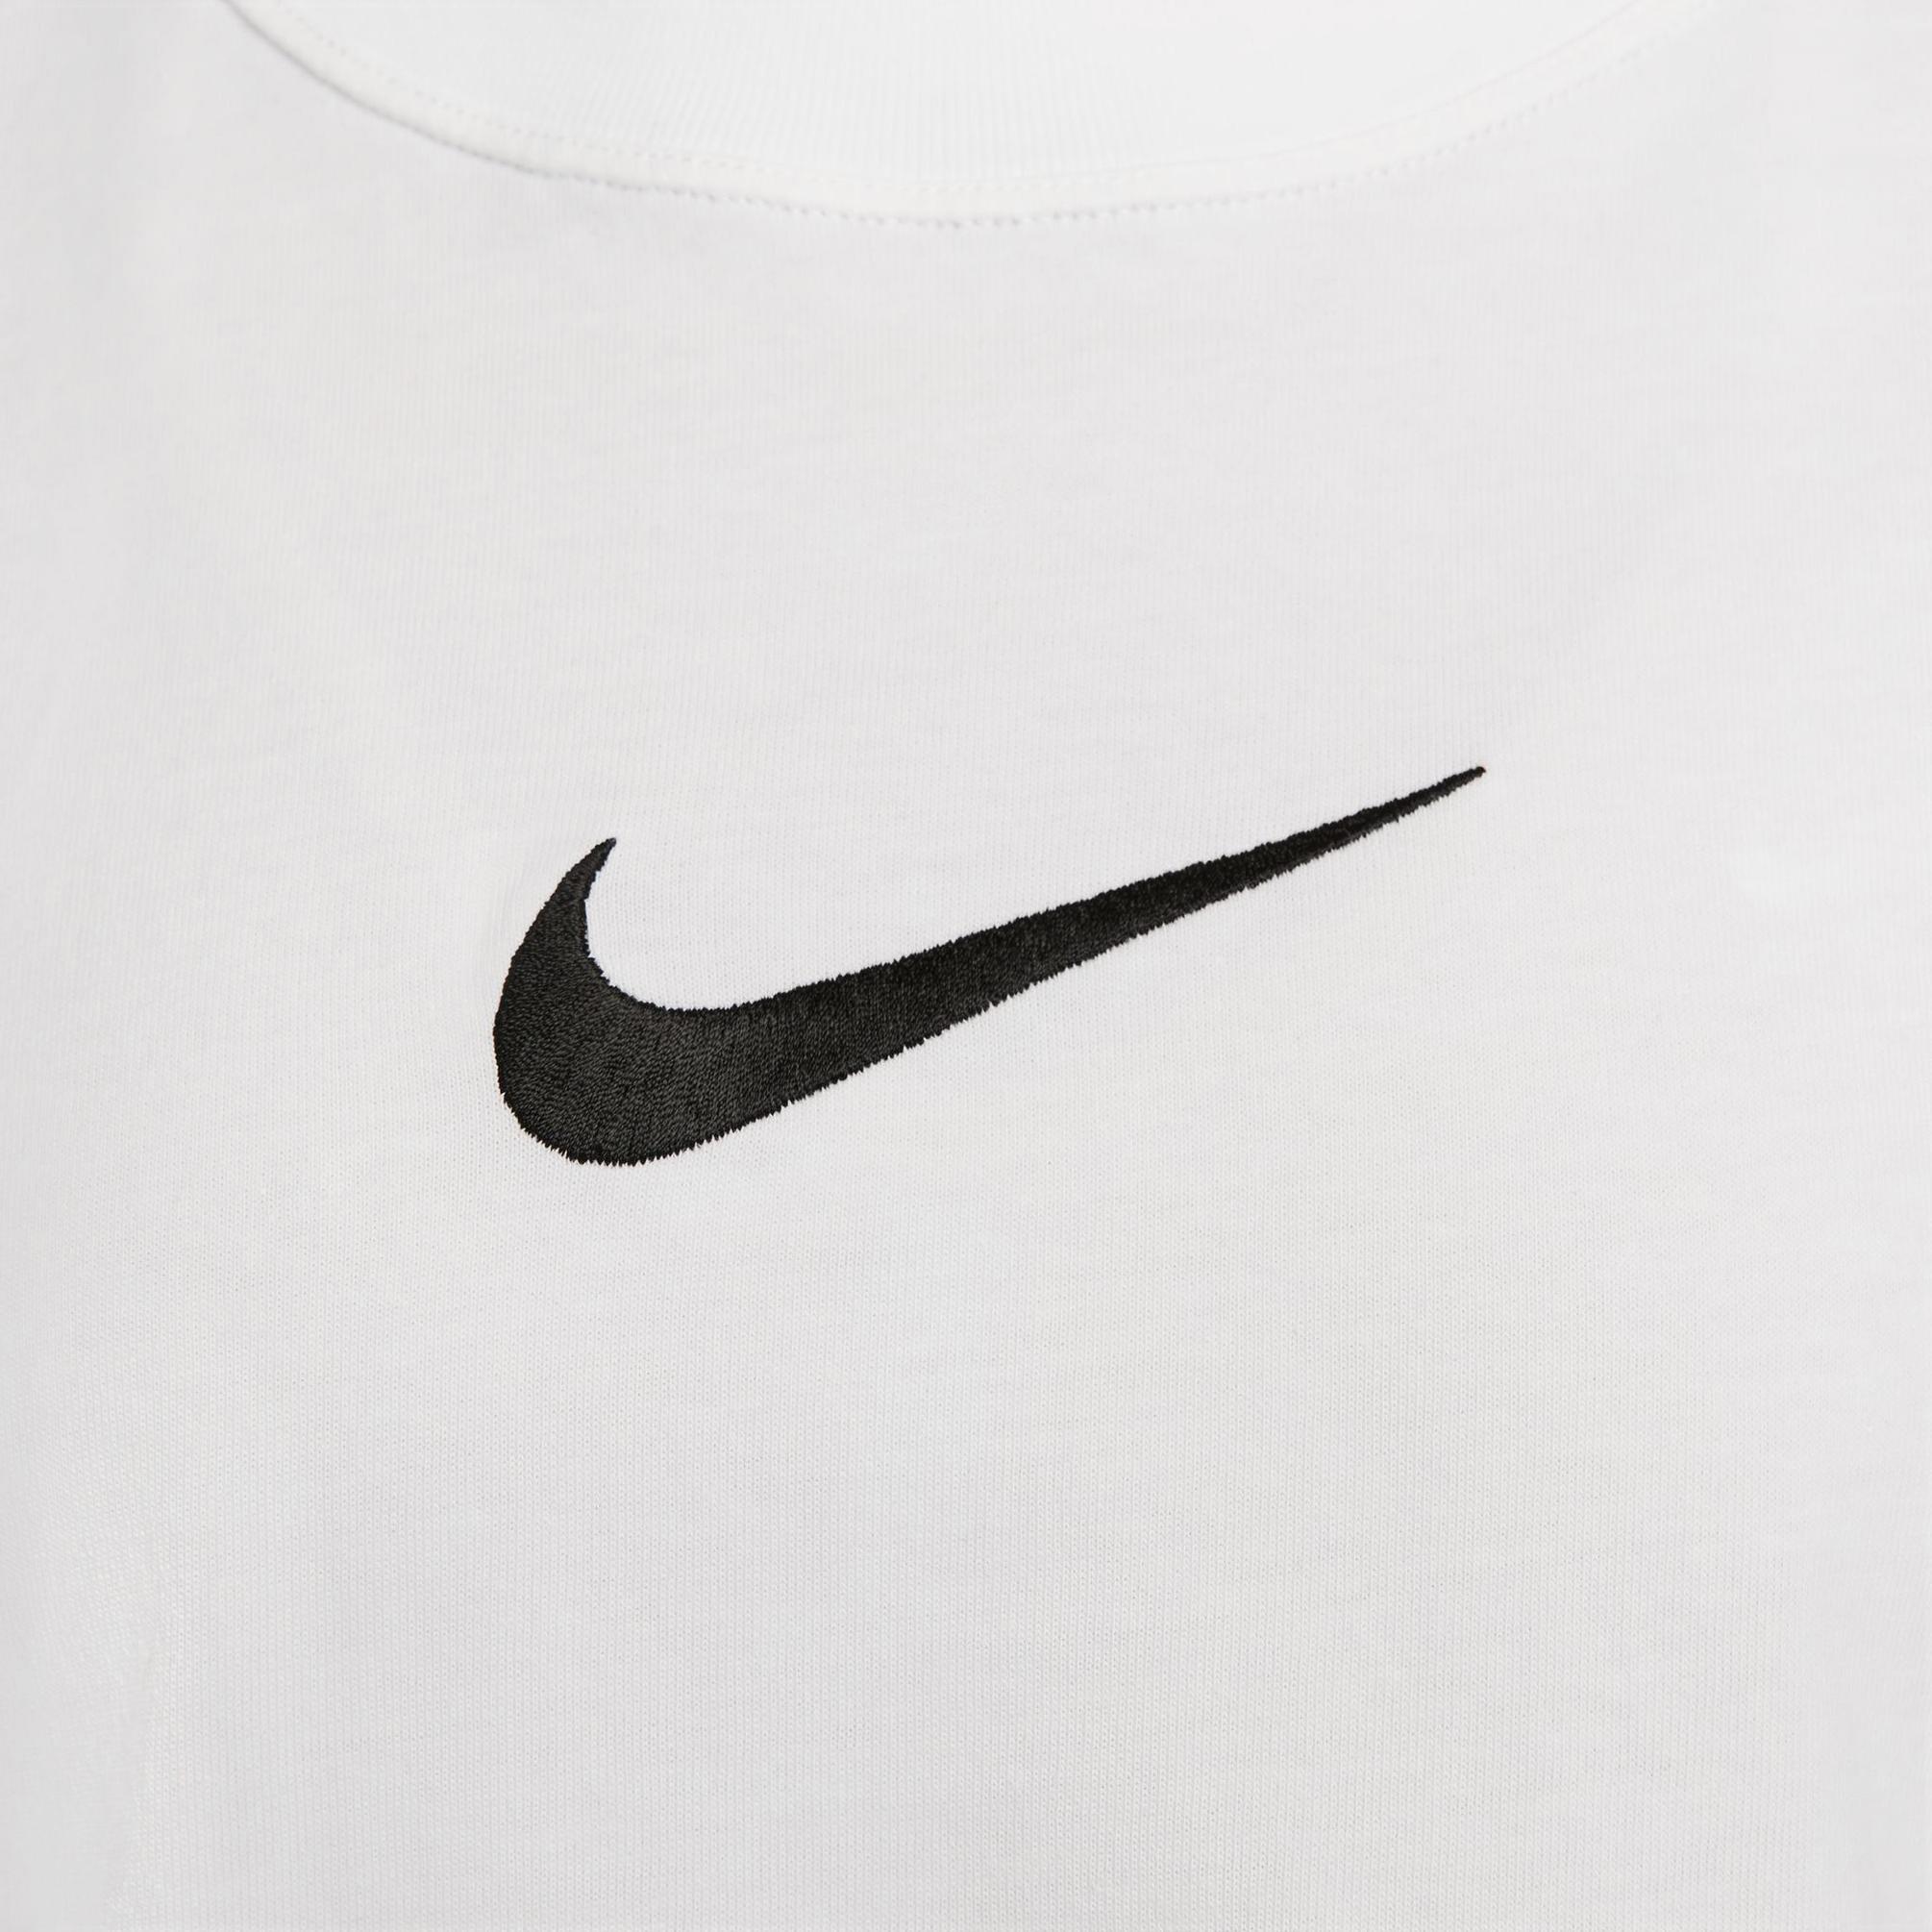  Nike Sportswear Brief Kadın Beyaz T-Shirt